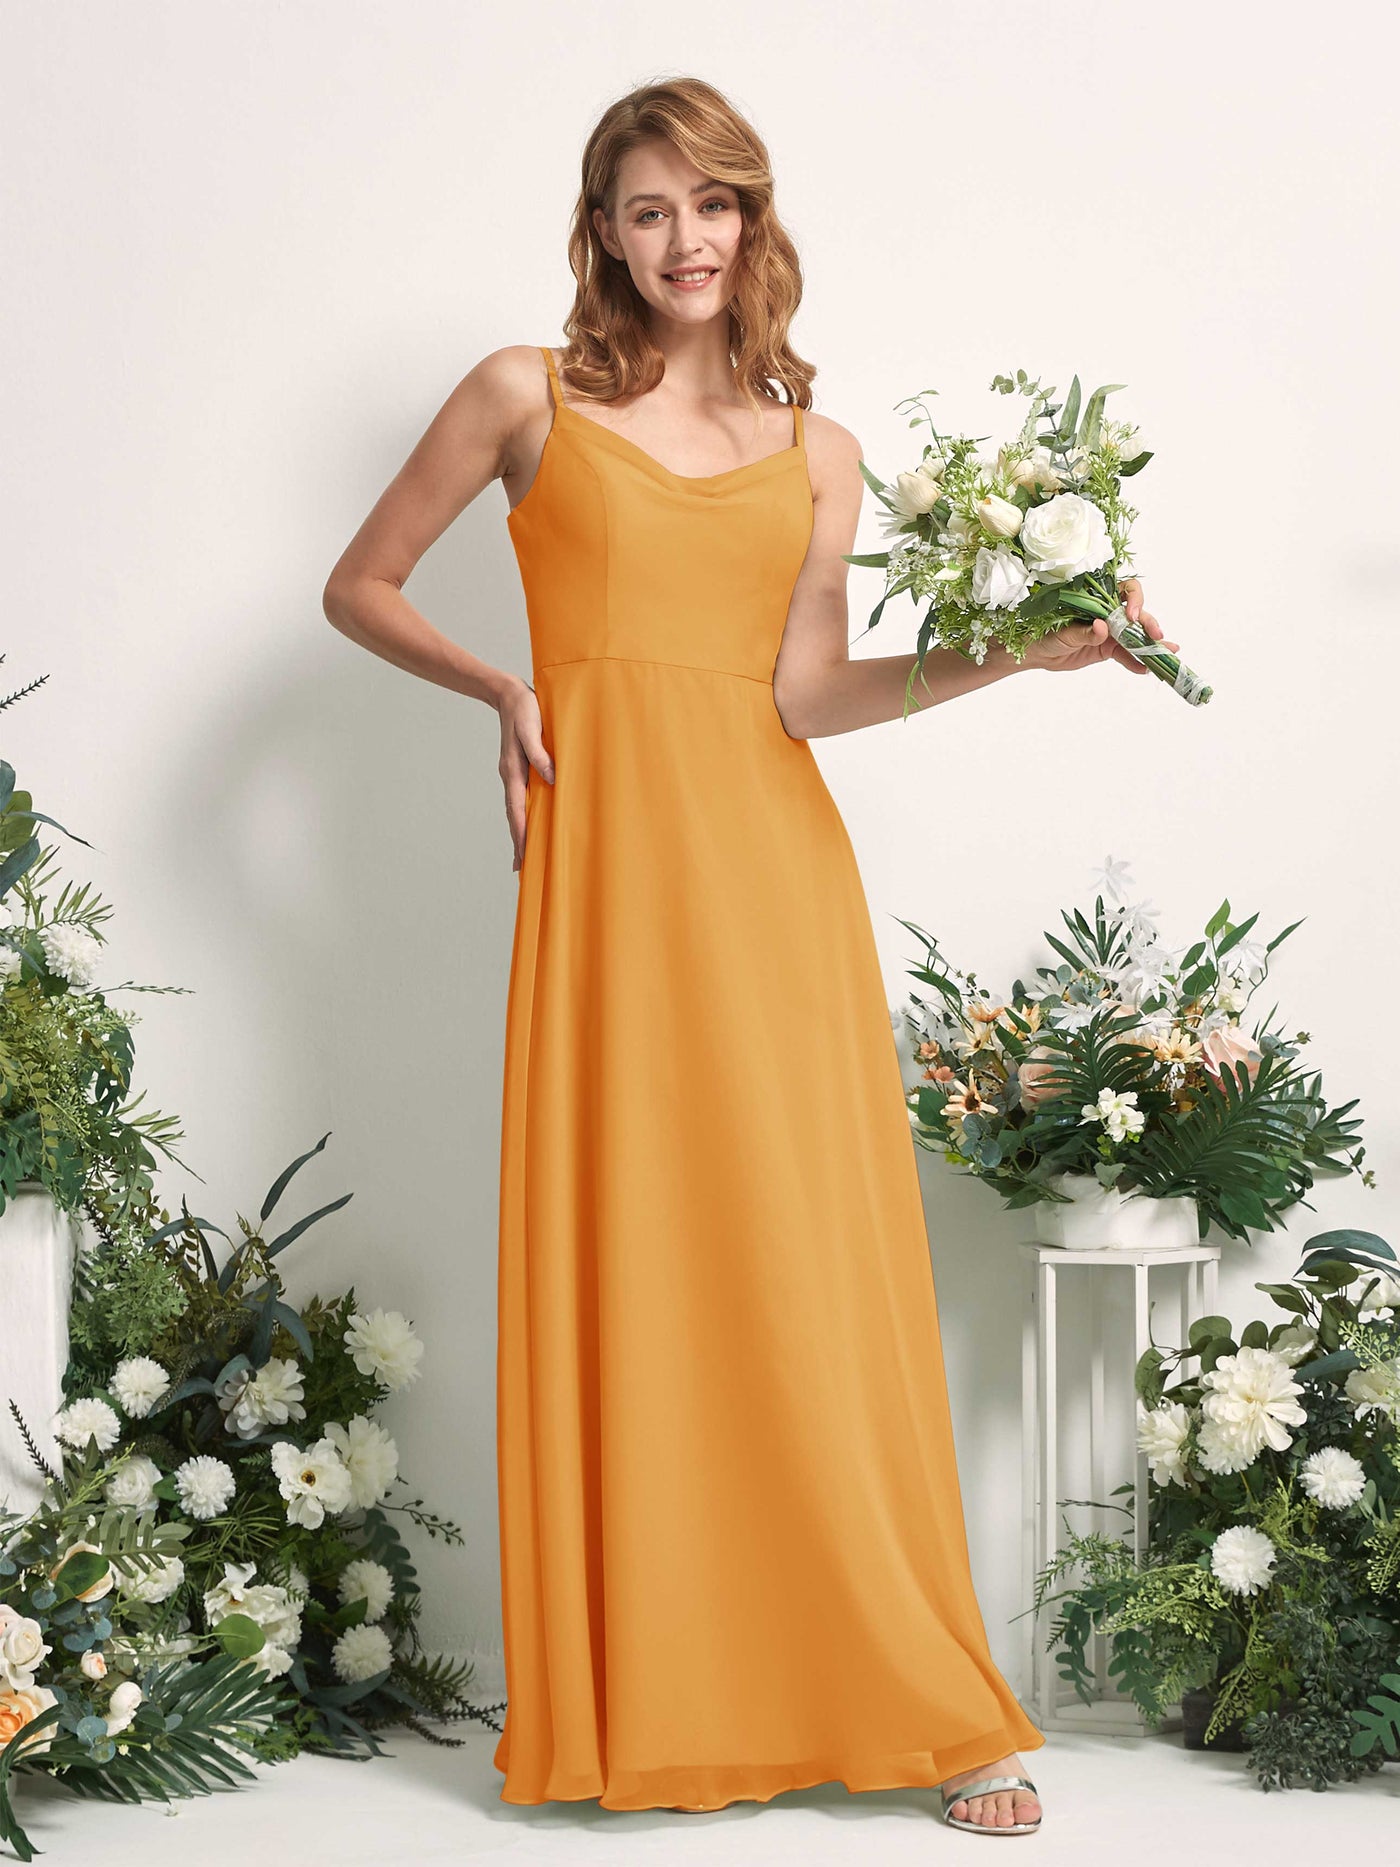 Bridesmaid Dress A-line Chiffon Spaghetti-straps Full Length Sleeveless Wedding Party Dress - Mango (81227202)#color_mango